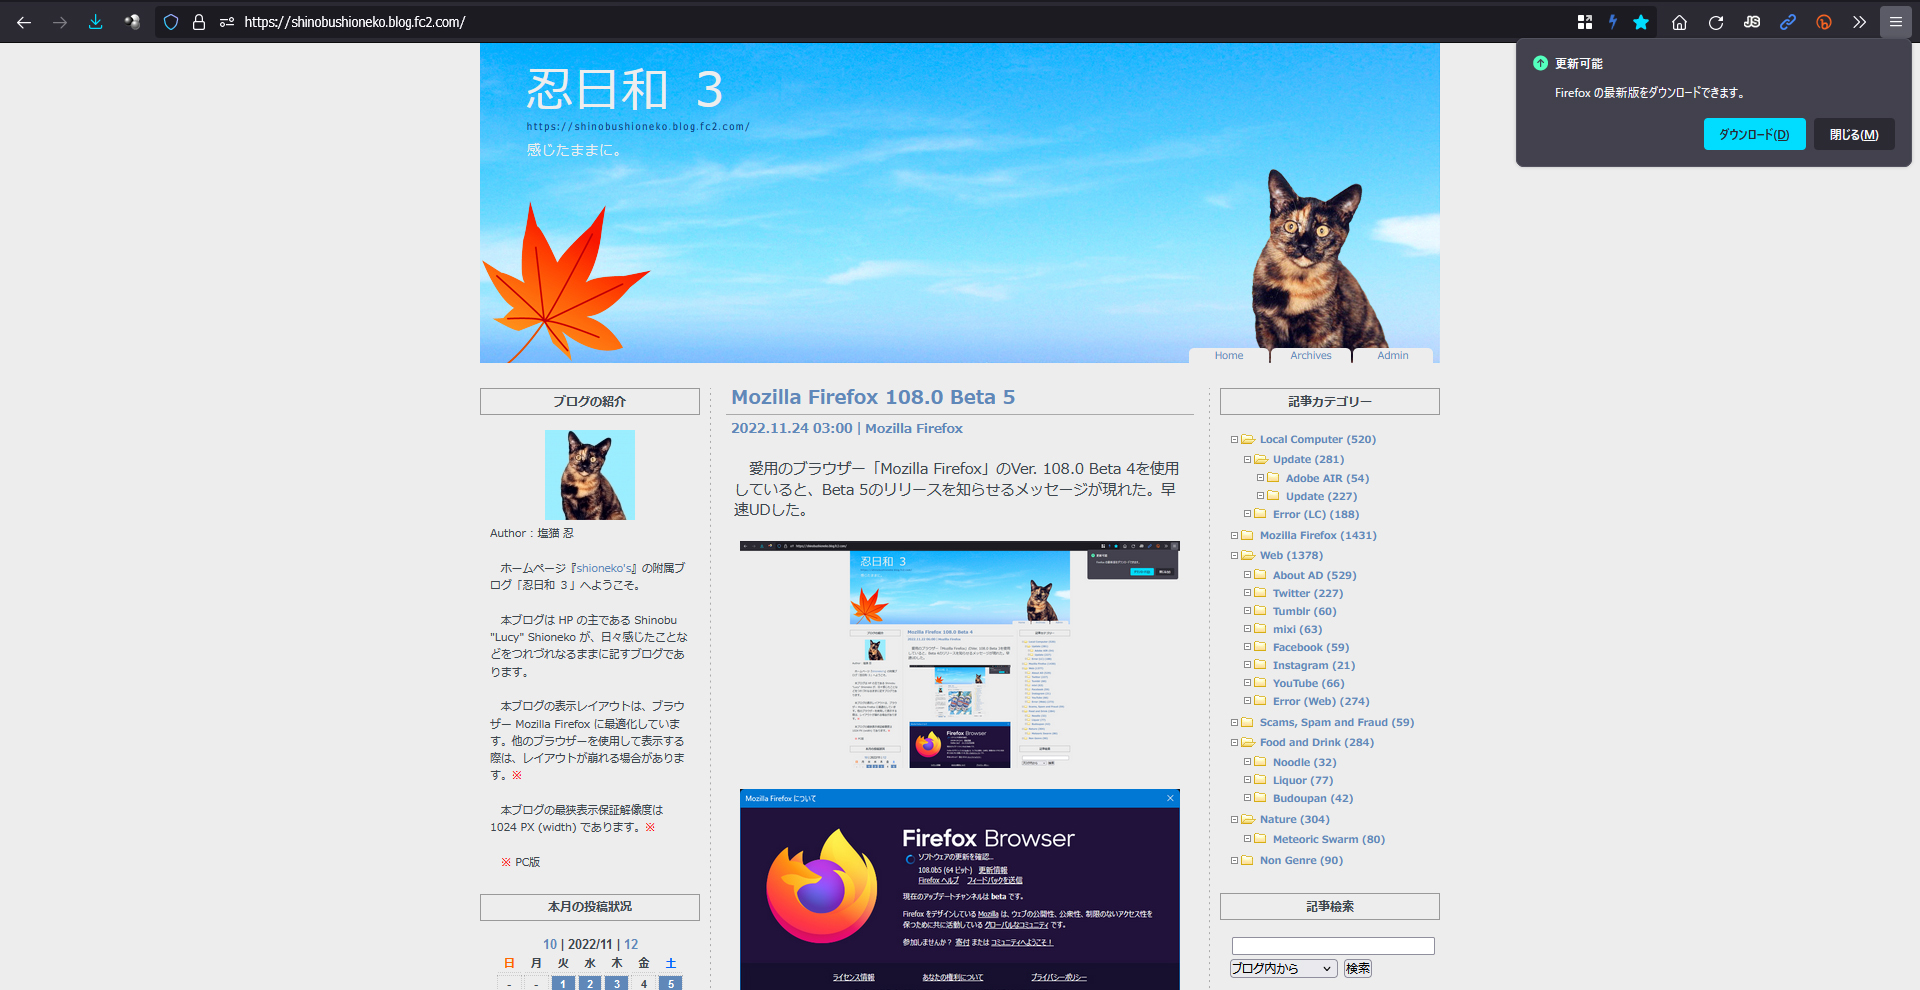 Mozilla Firefox 108.0 Beta 6